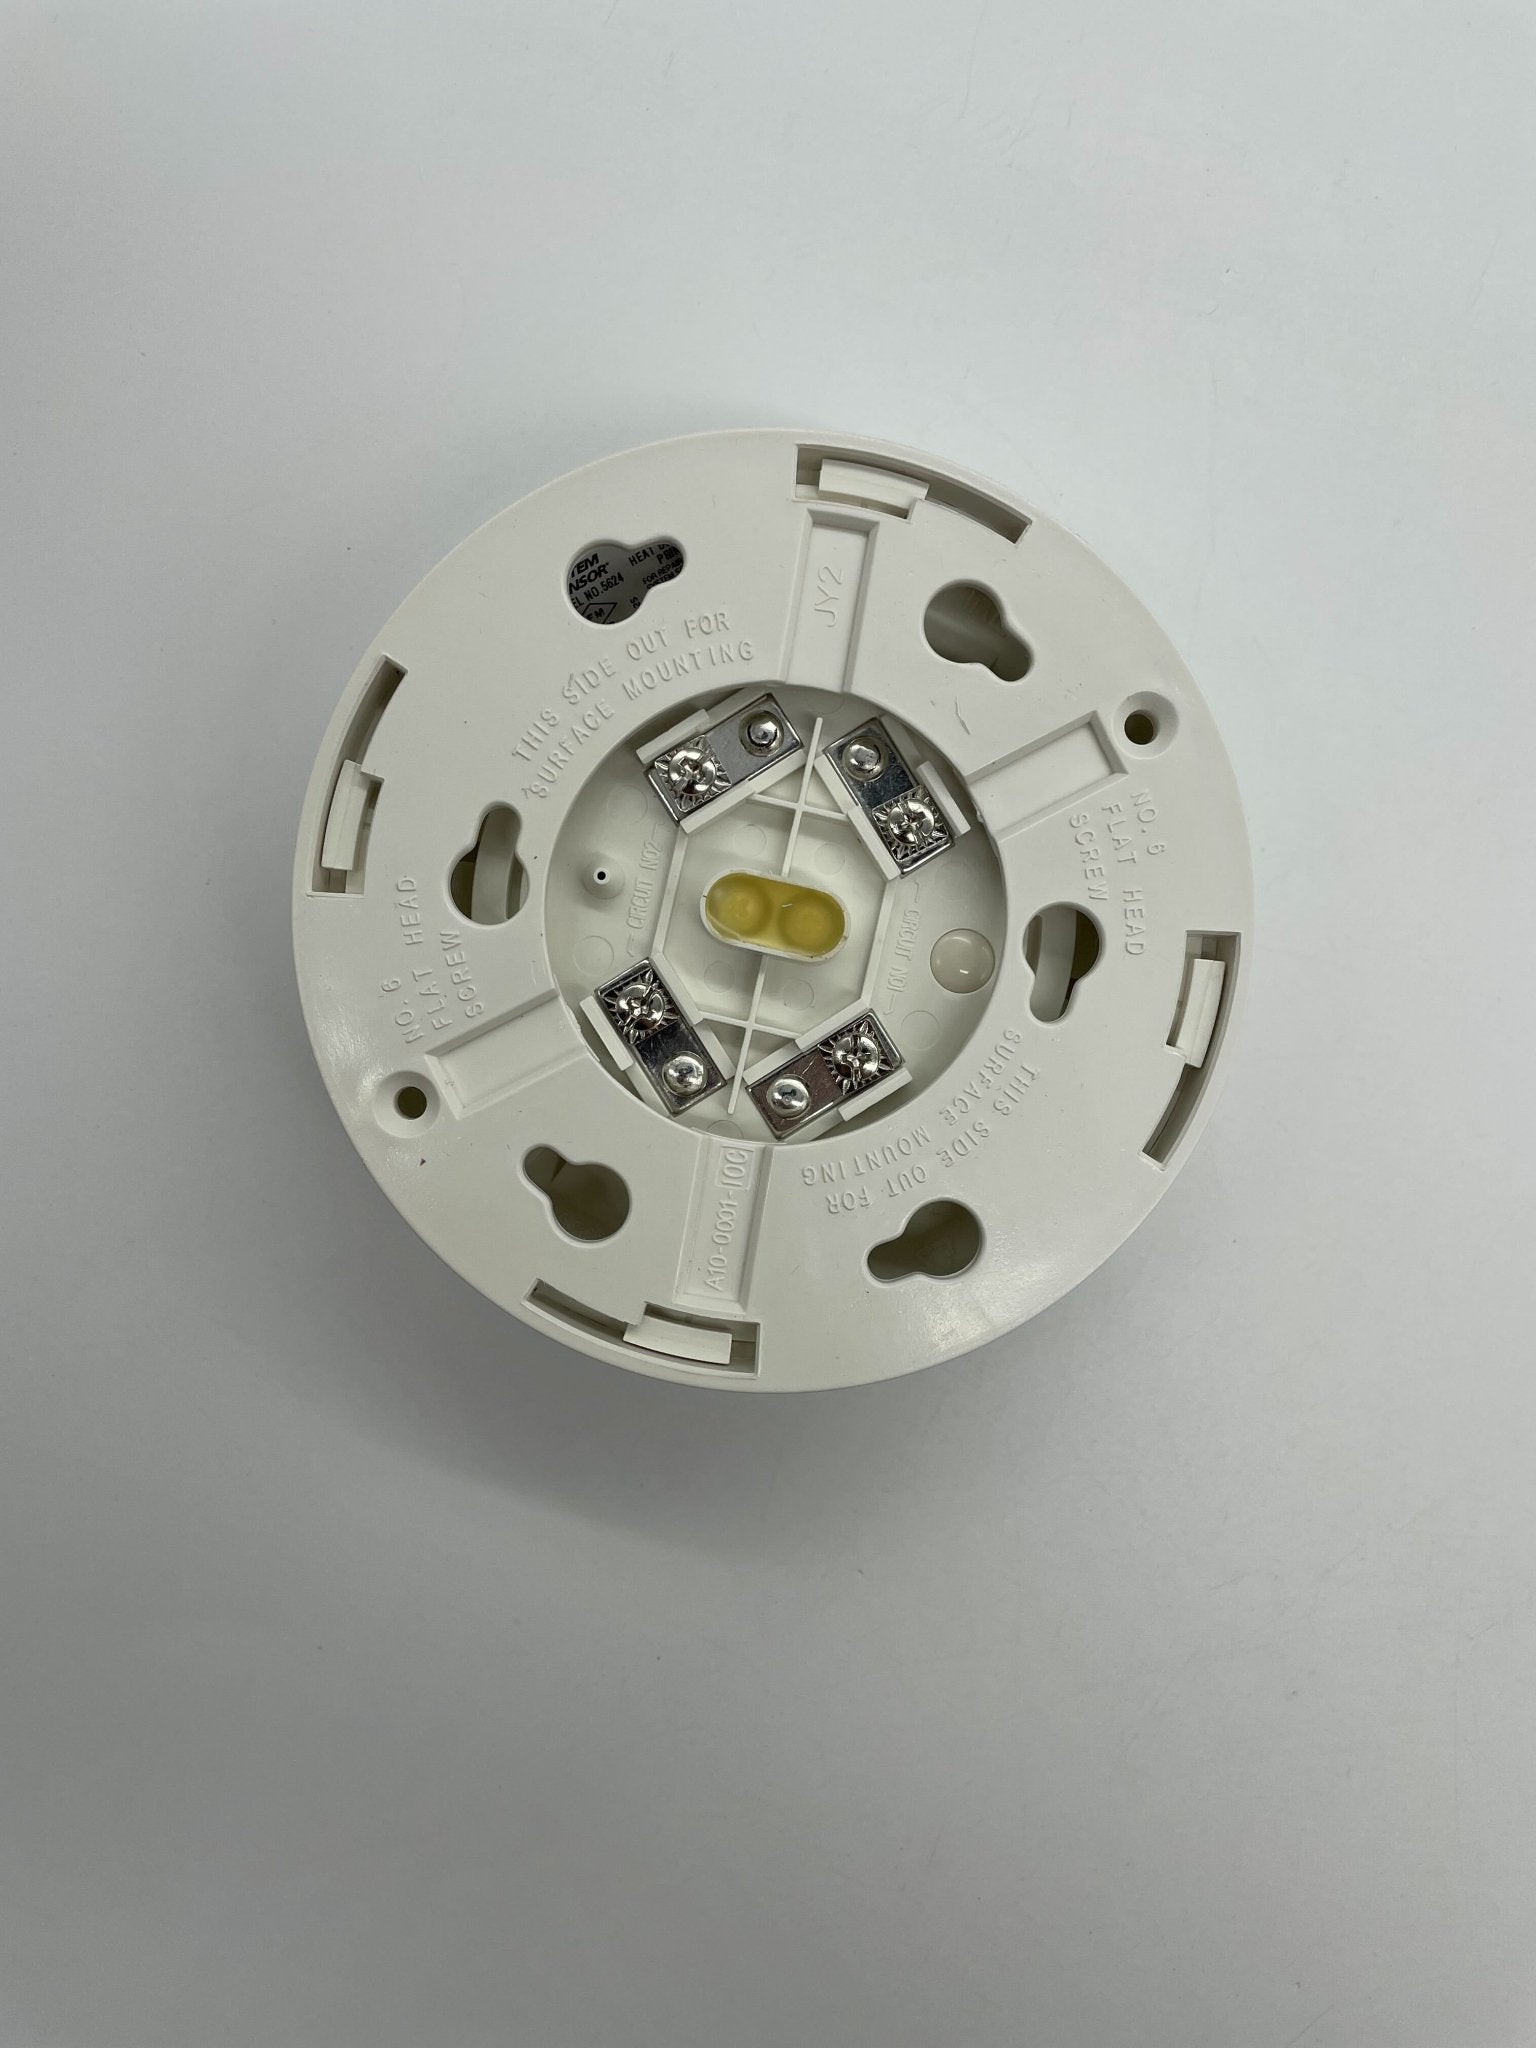 System Sensor 5624 - The Fire Alarm Supplier